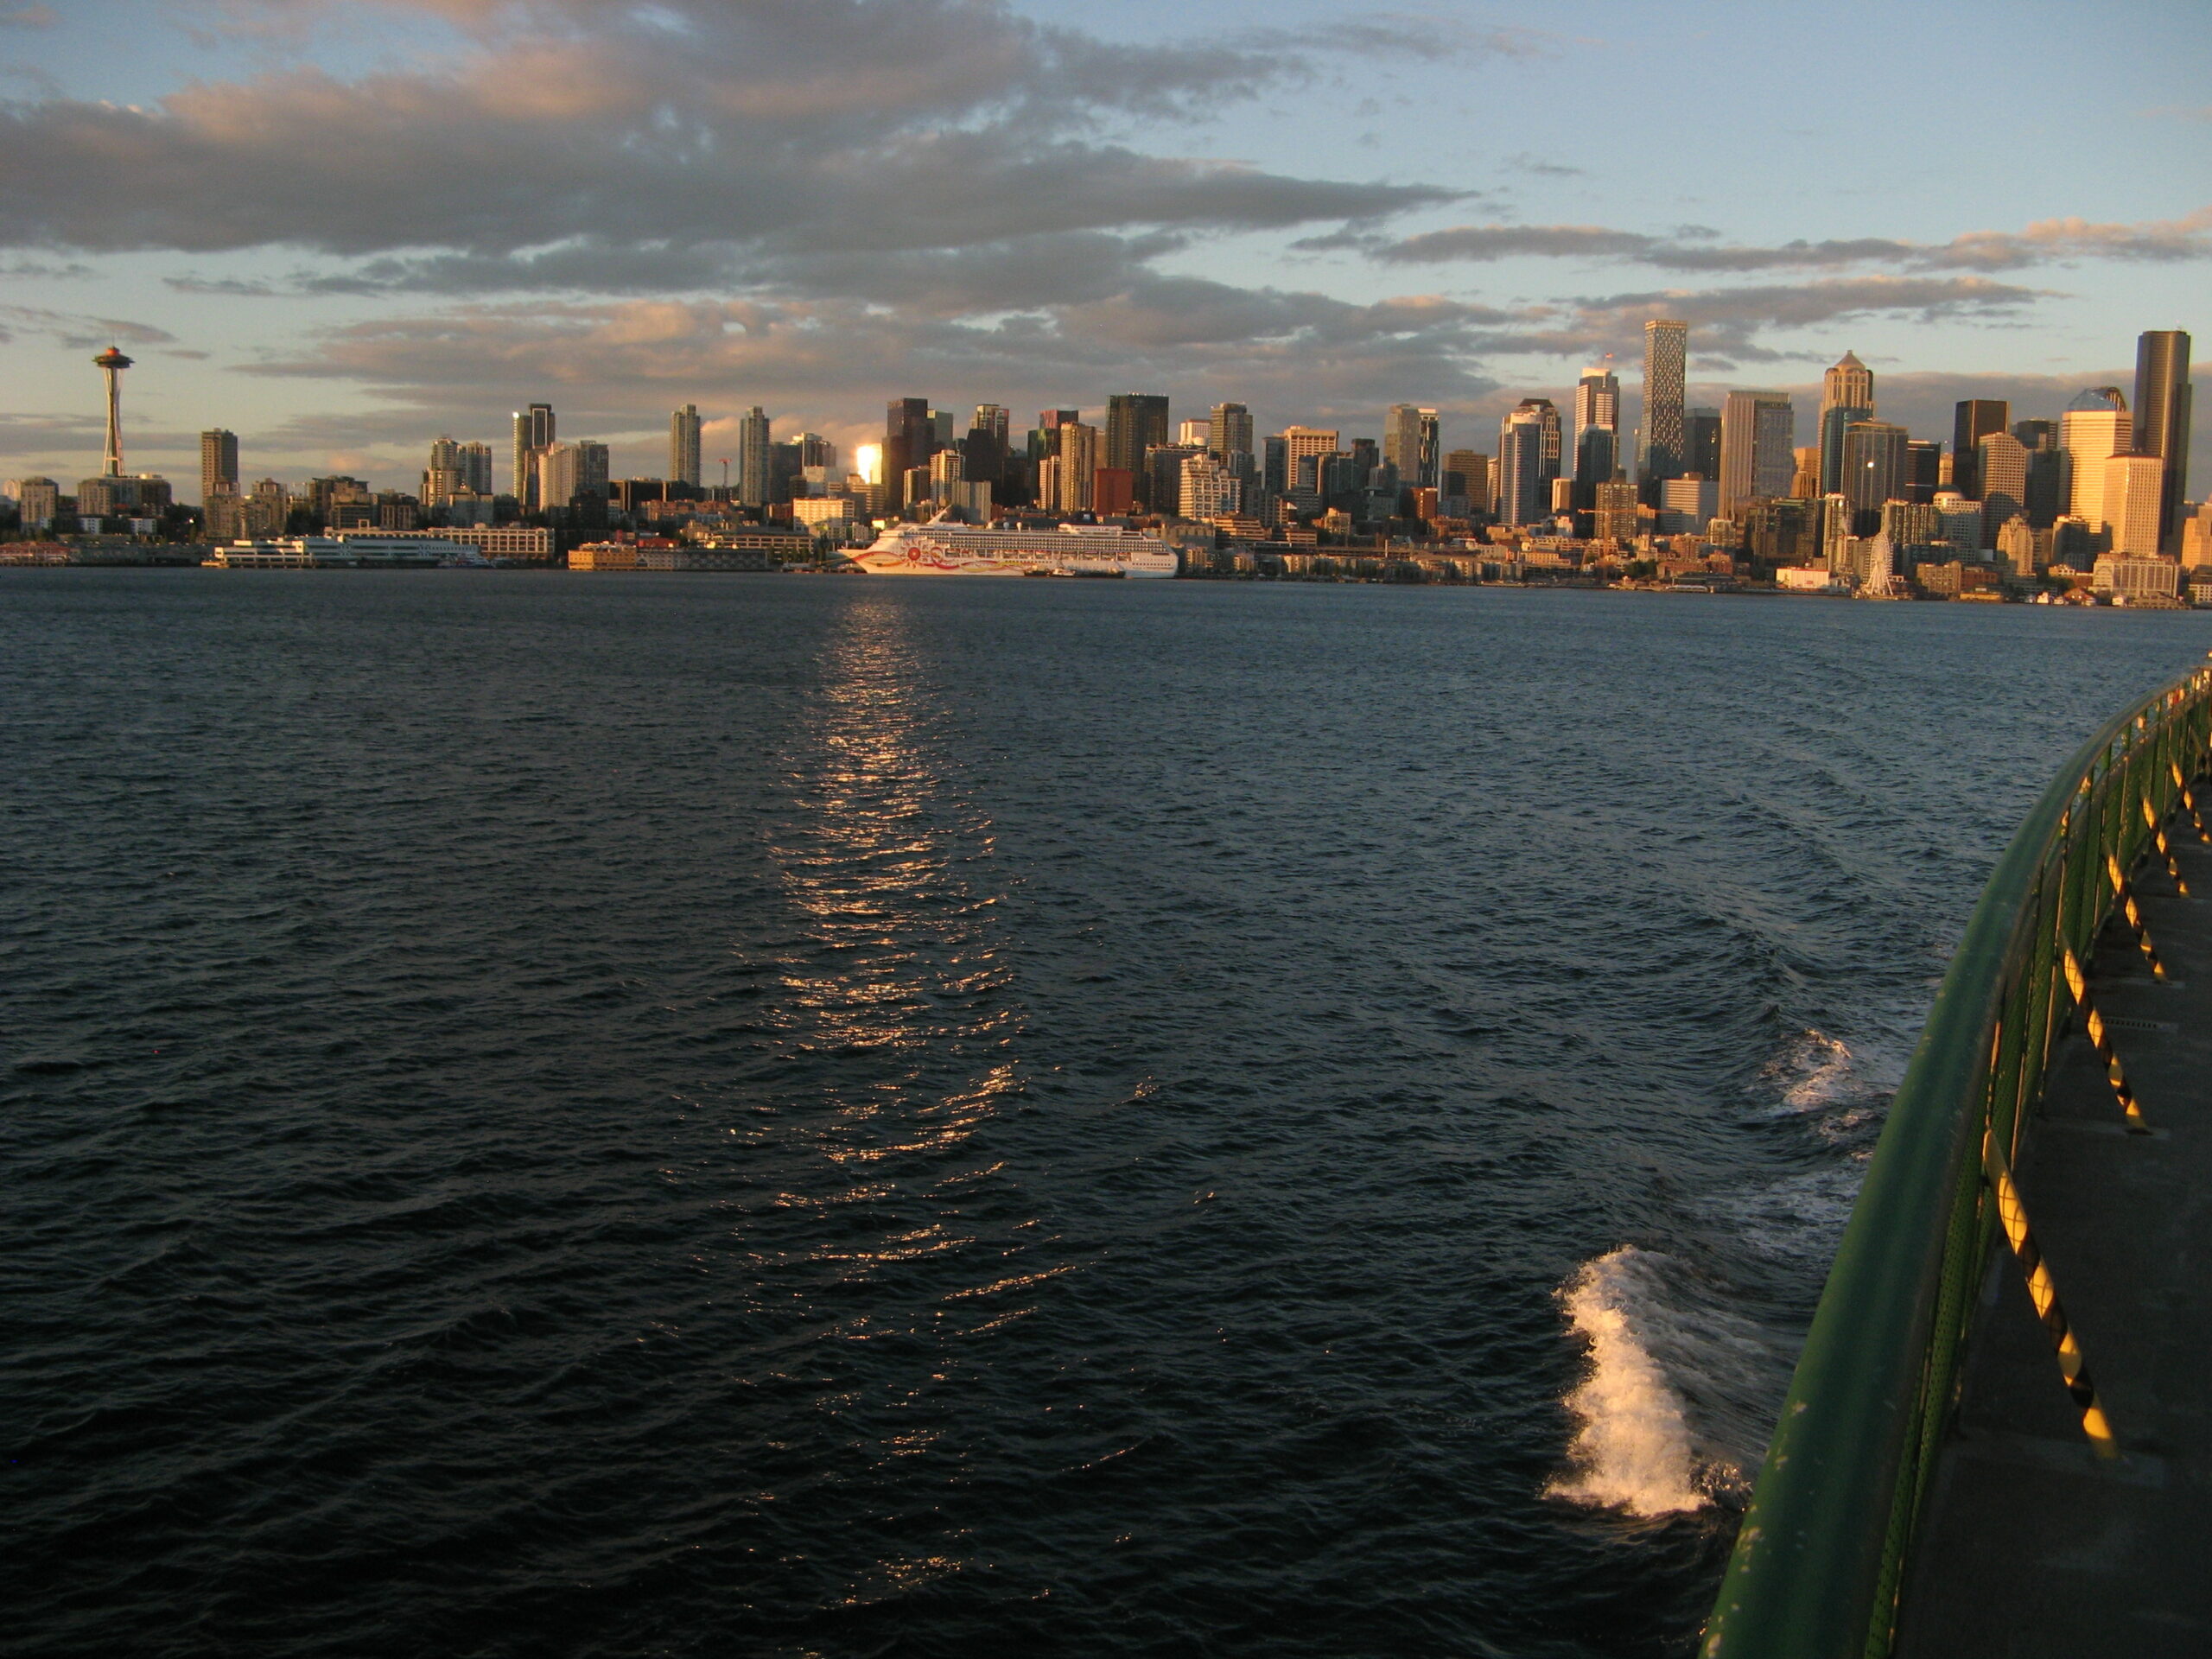 Seattle seen from the ferry to Bainbridge Island